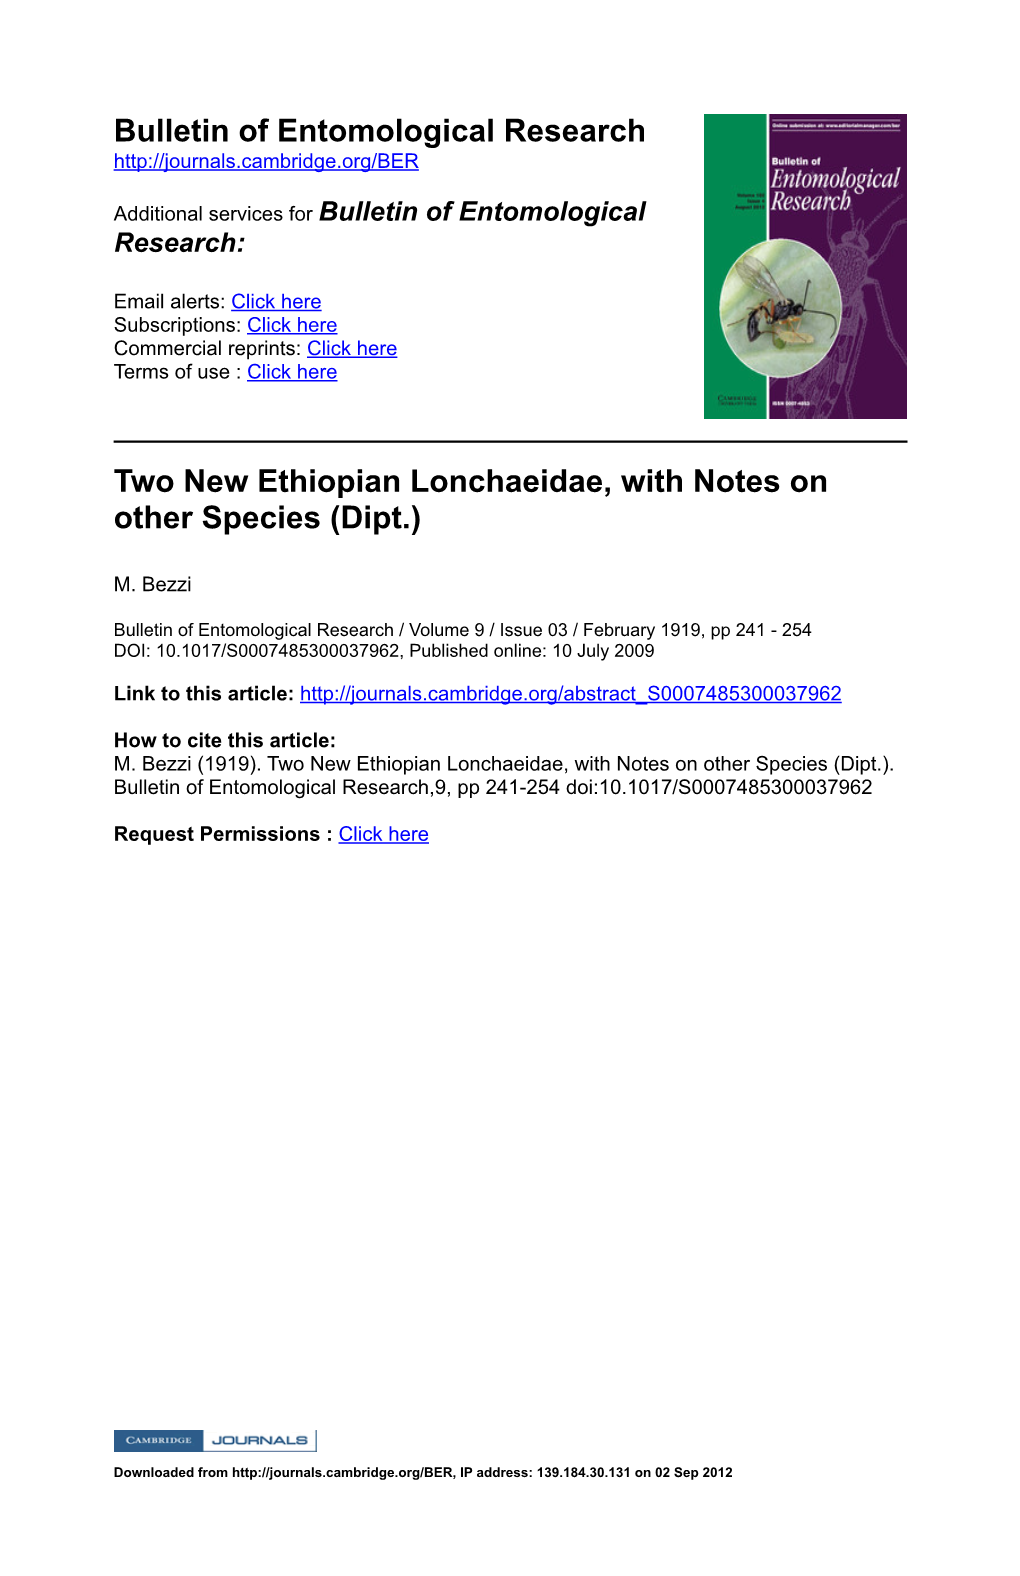 Bulletin of Entomological Research Two New Ethiopian Lonchaeidae